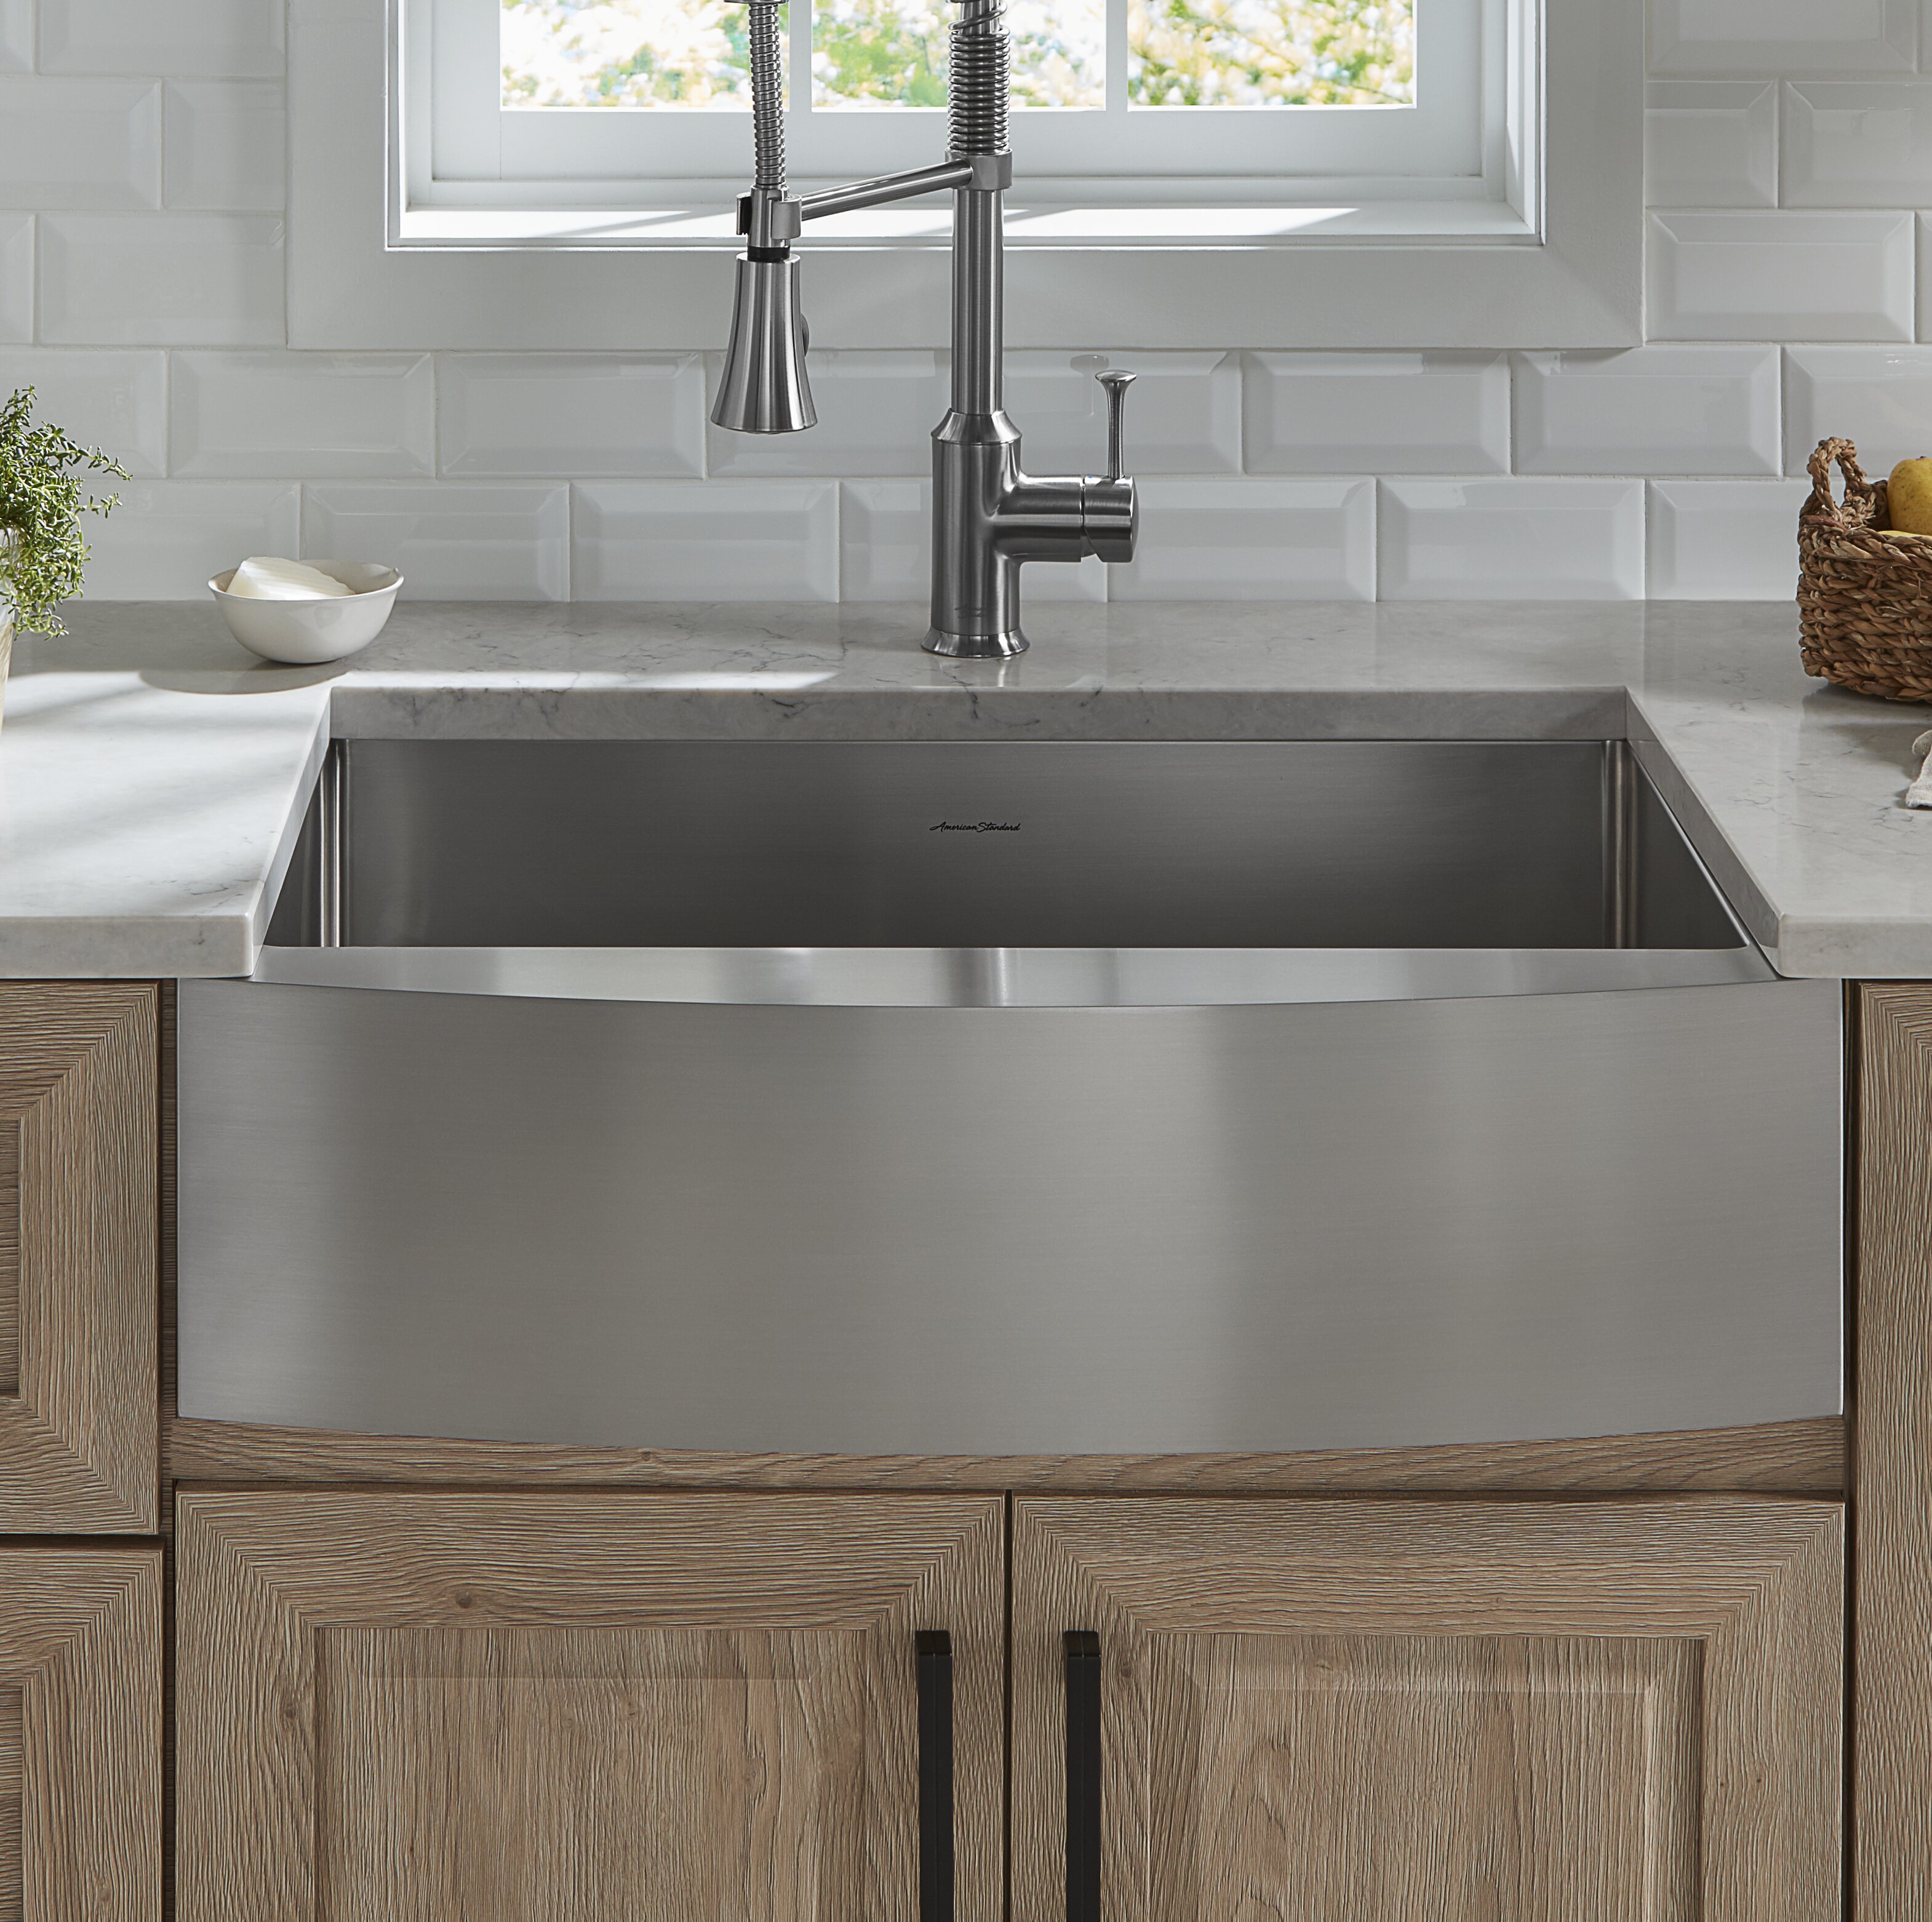 American Standard Pekoe 30 L X 22 W Farmhouse Apron Kitchen Sink With Basket Strainer Wayfair